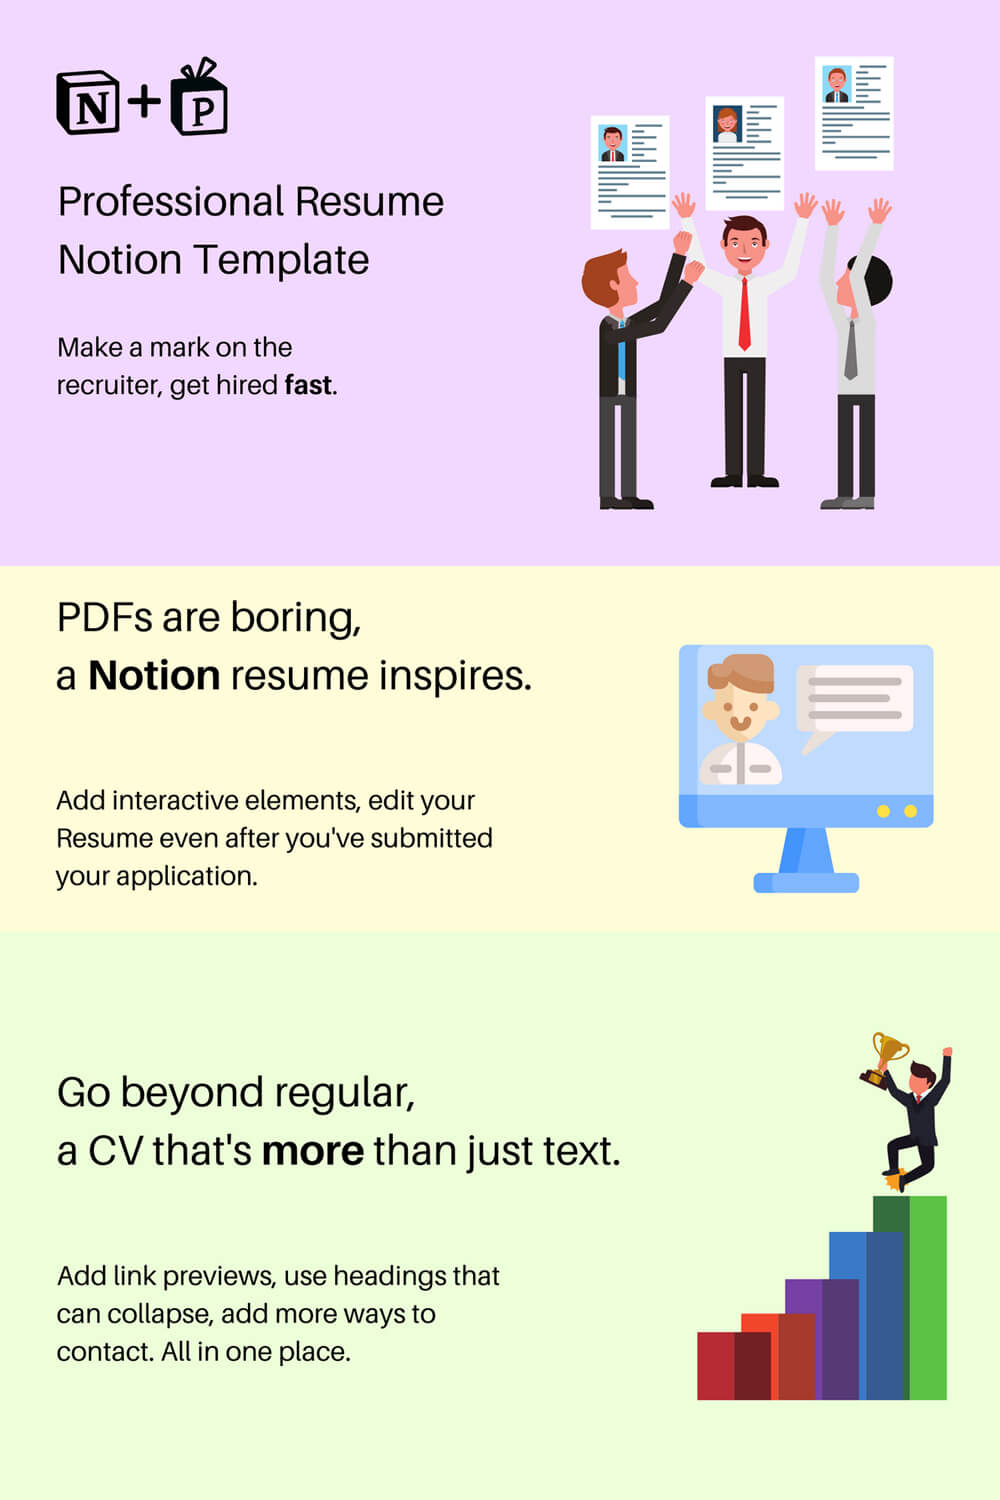 Go beyond regular, a CV that's more than just text.